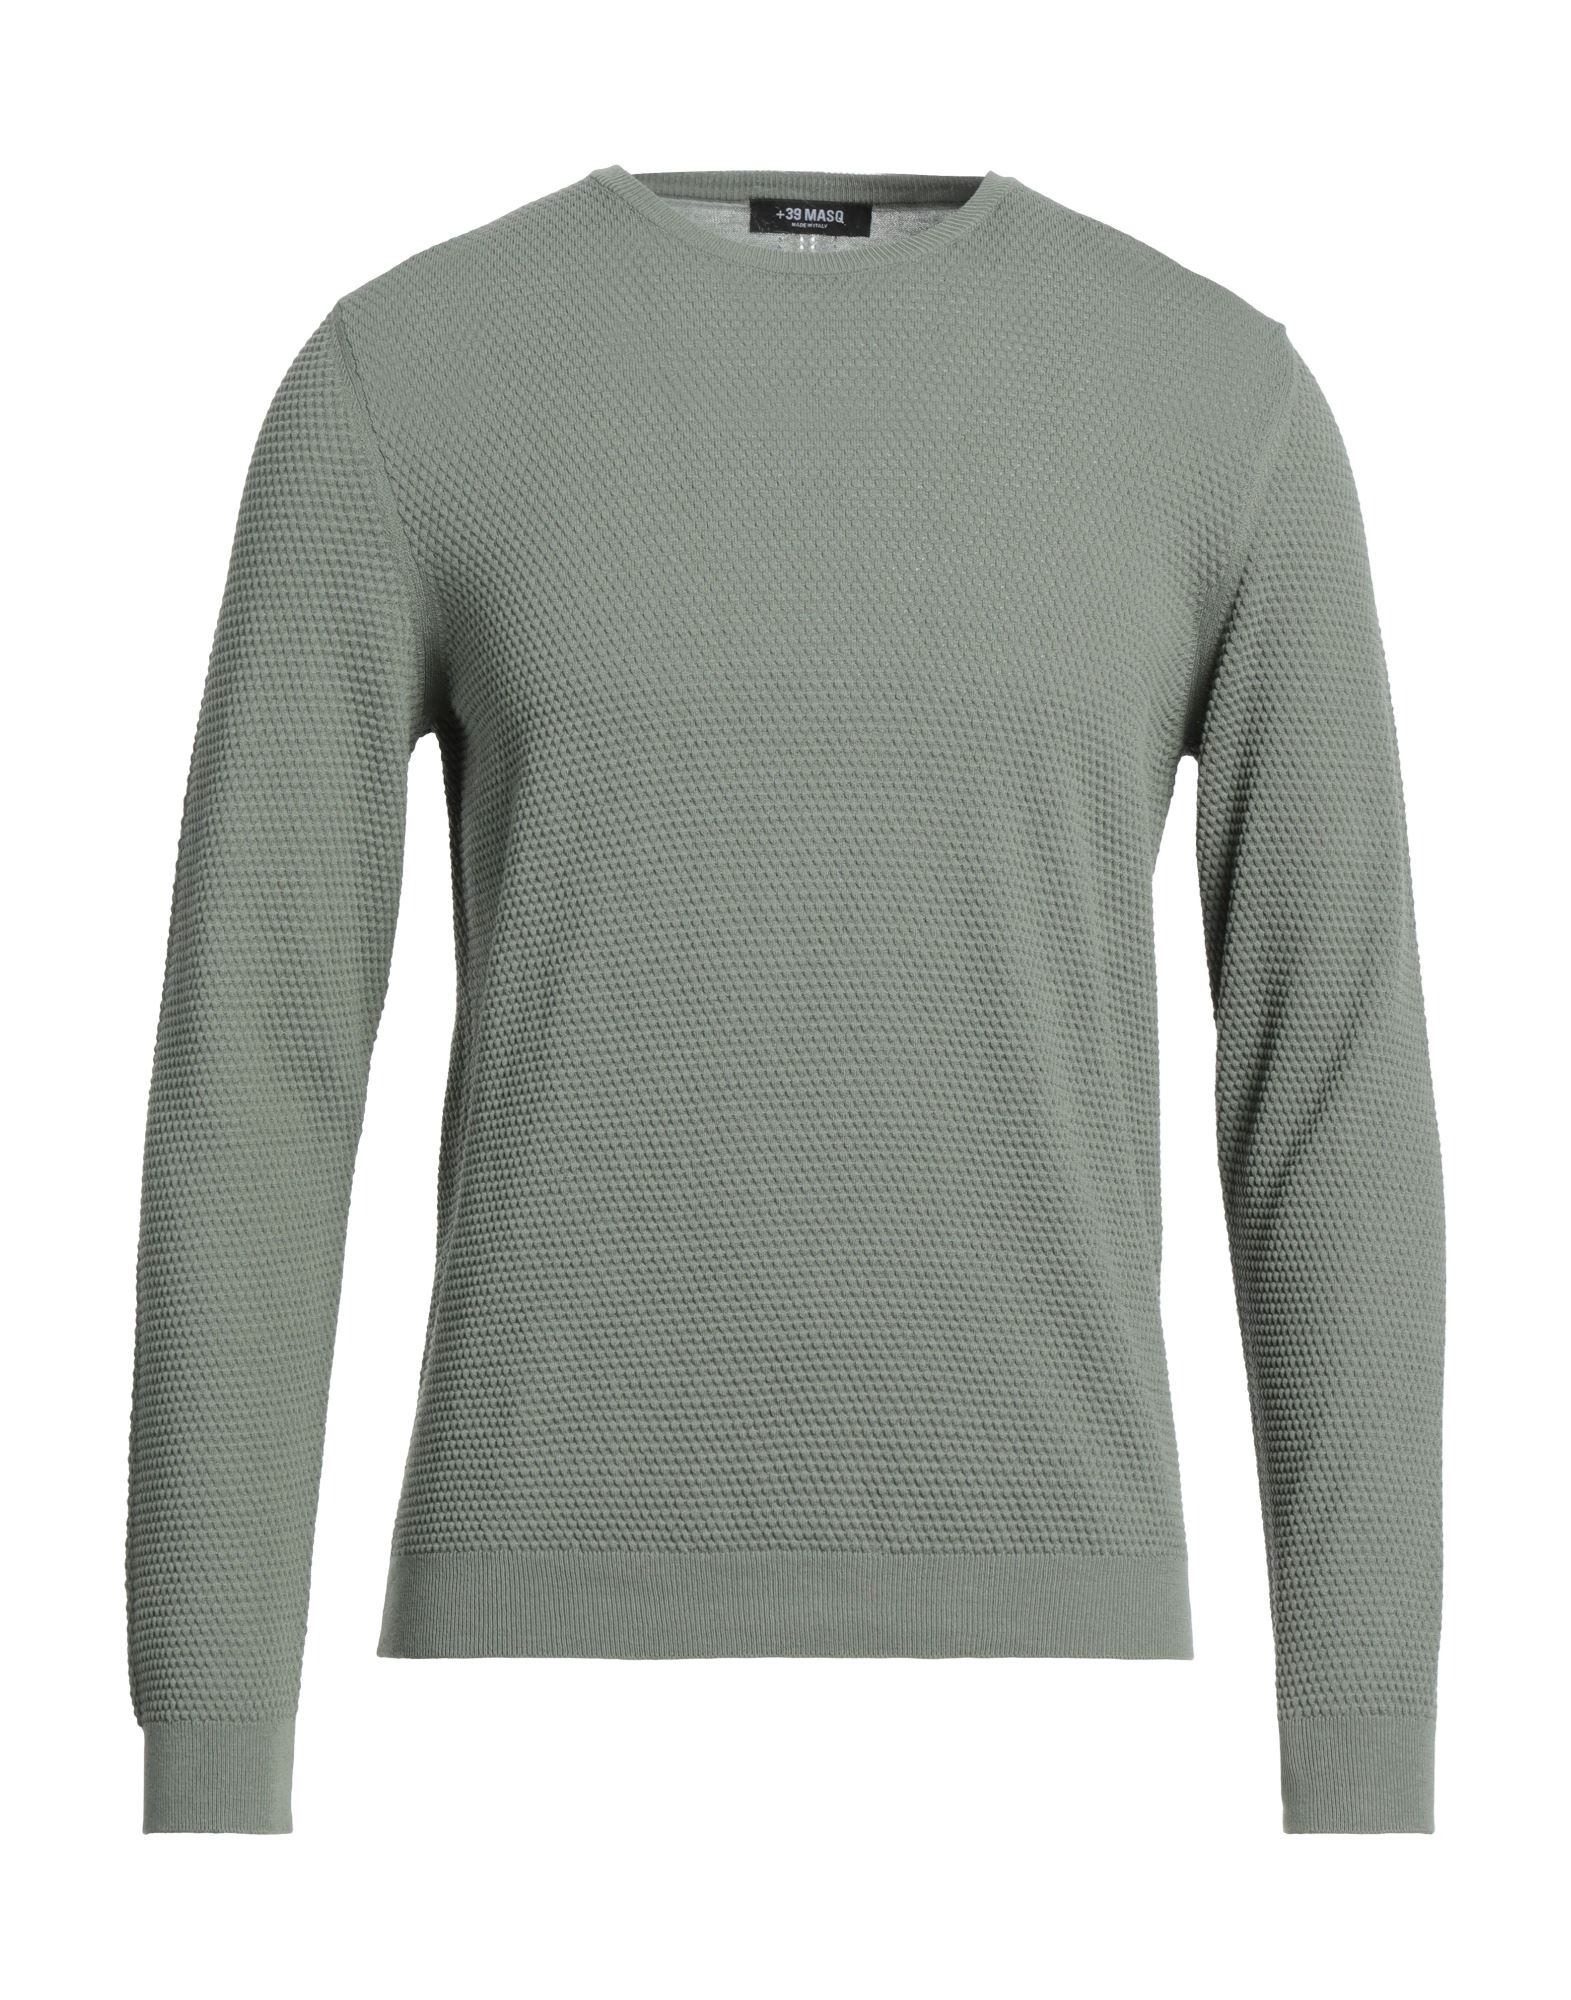 +39 Masq Man Sweater Military Green Size M Cotton